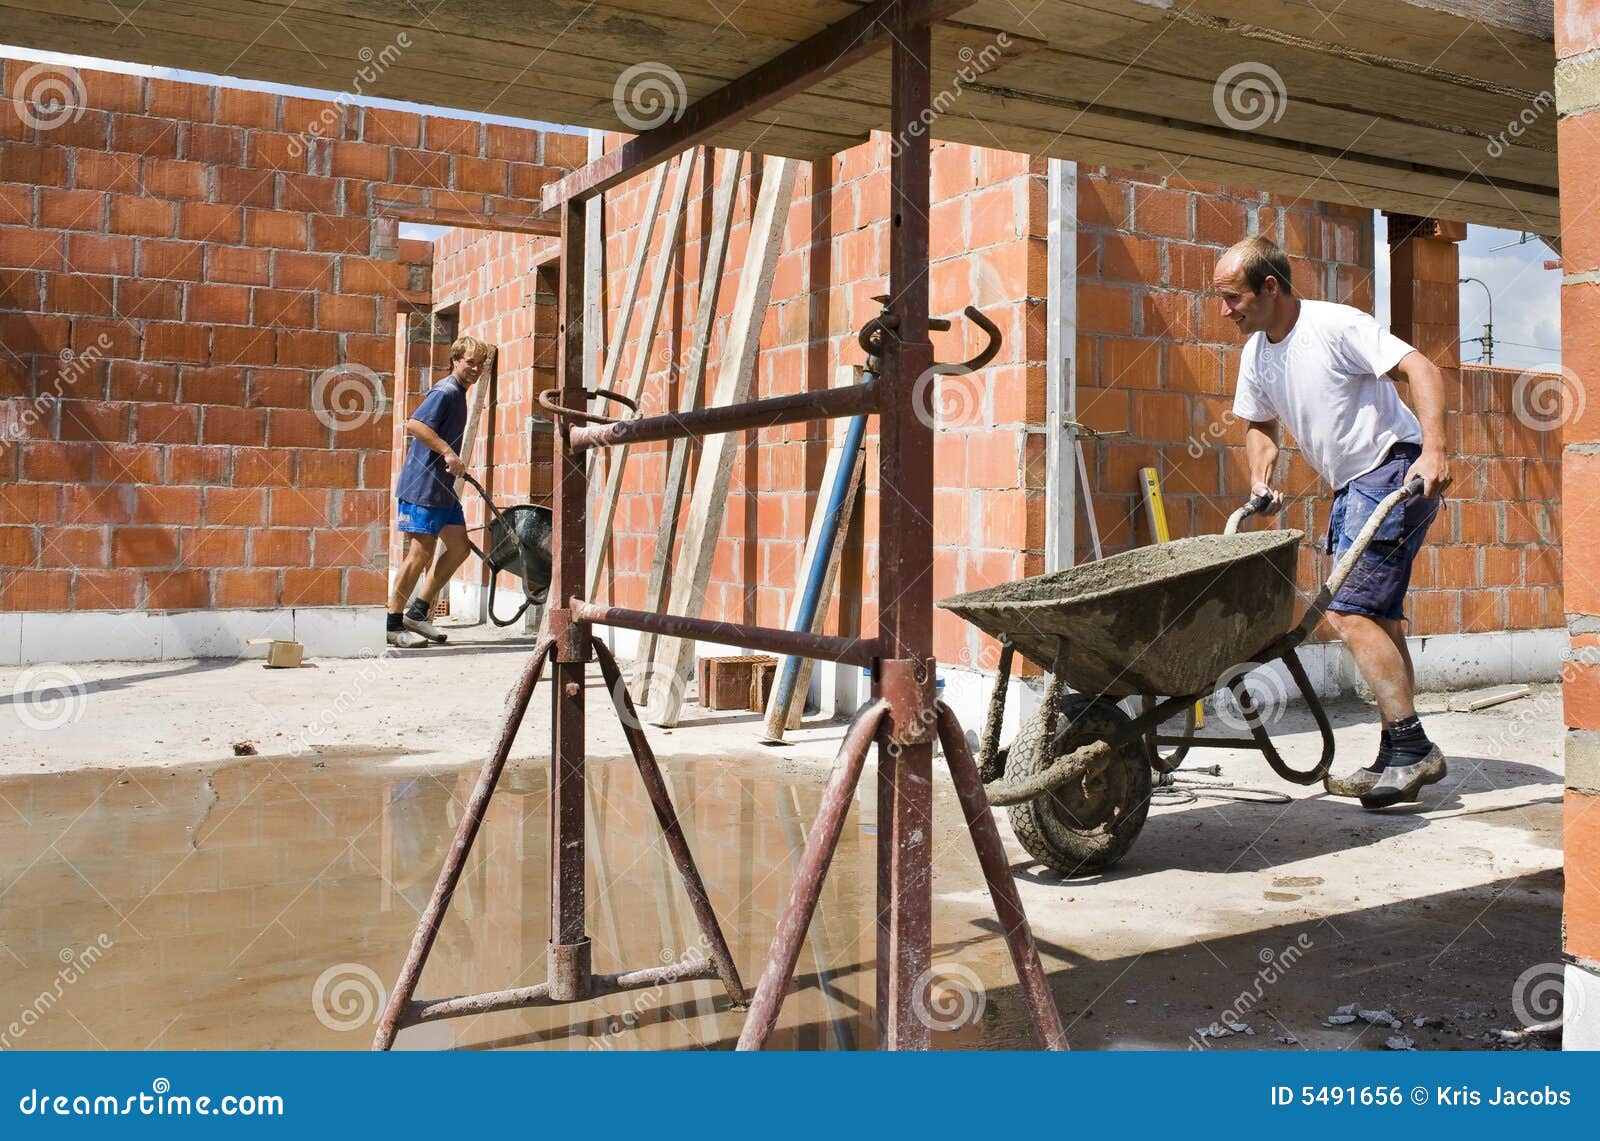 builders carrying wheelbarrows